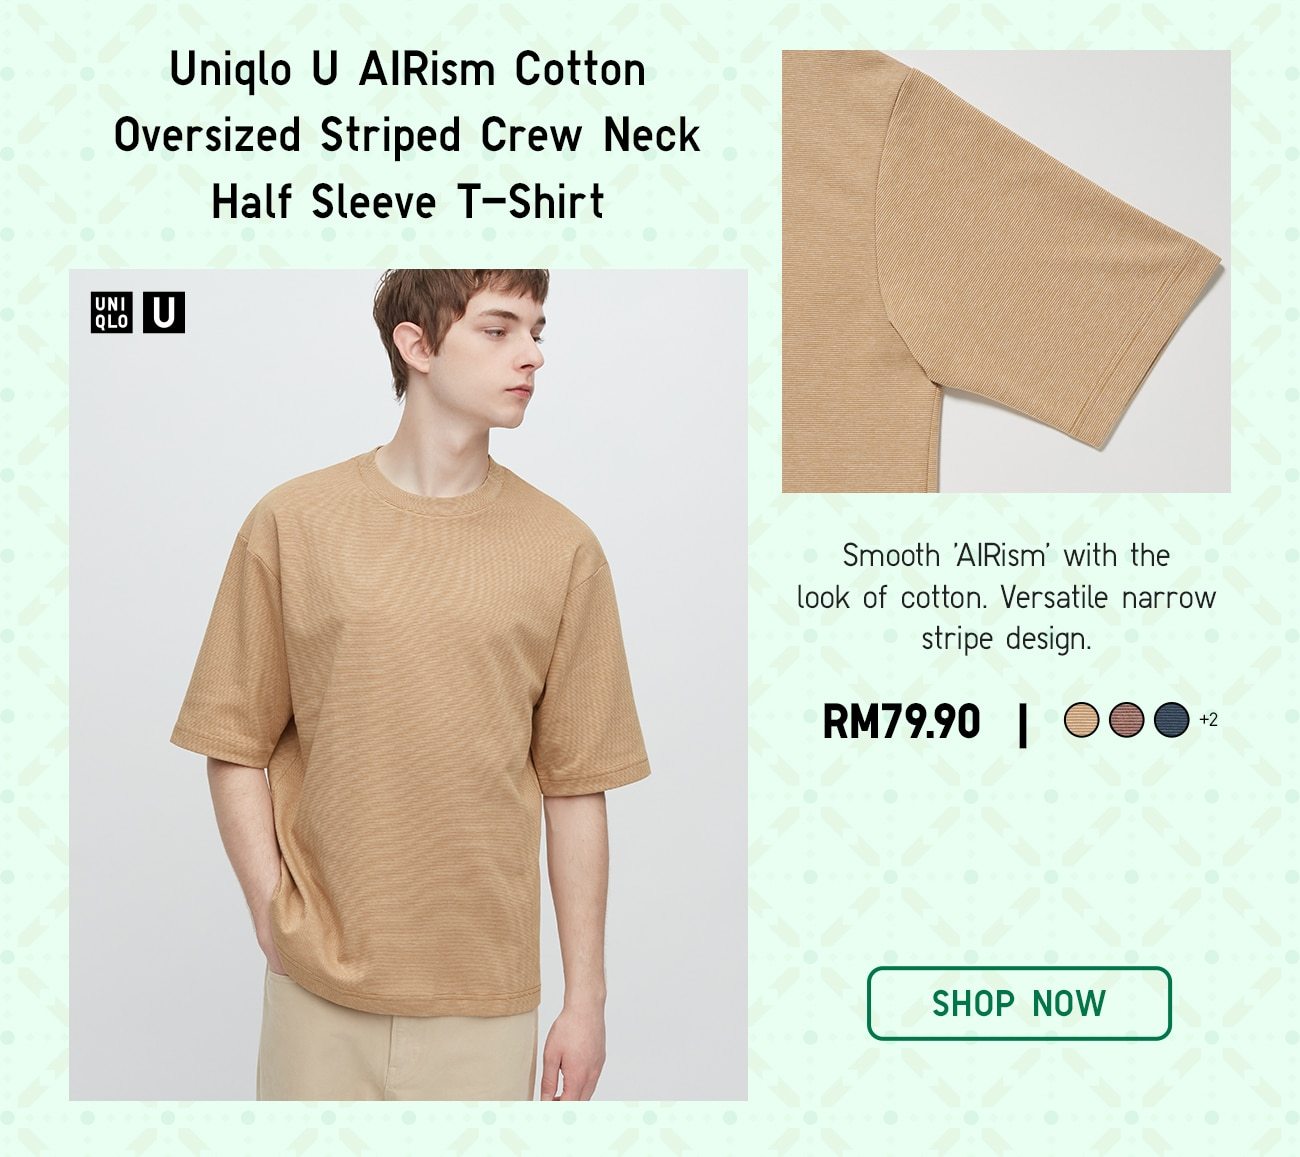 Uniqlo U AIRism Cotton Oversized Striped Crew Neck Half Sleeve T-Shirt